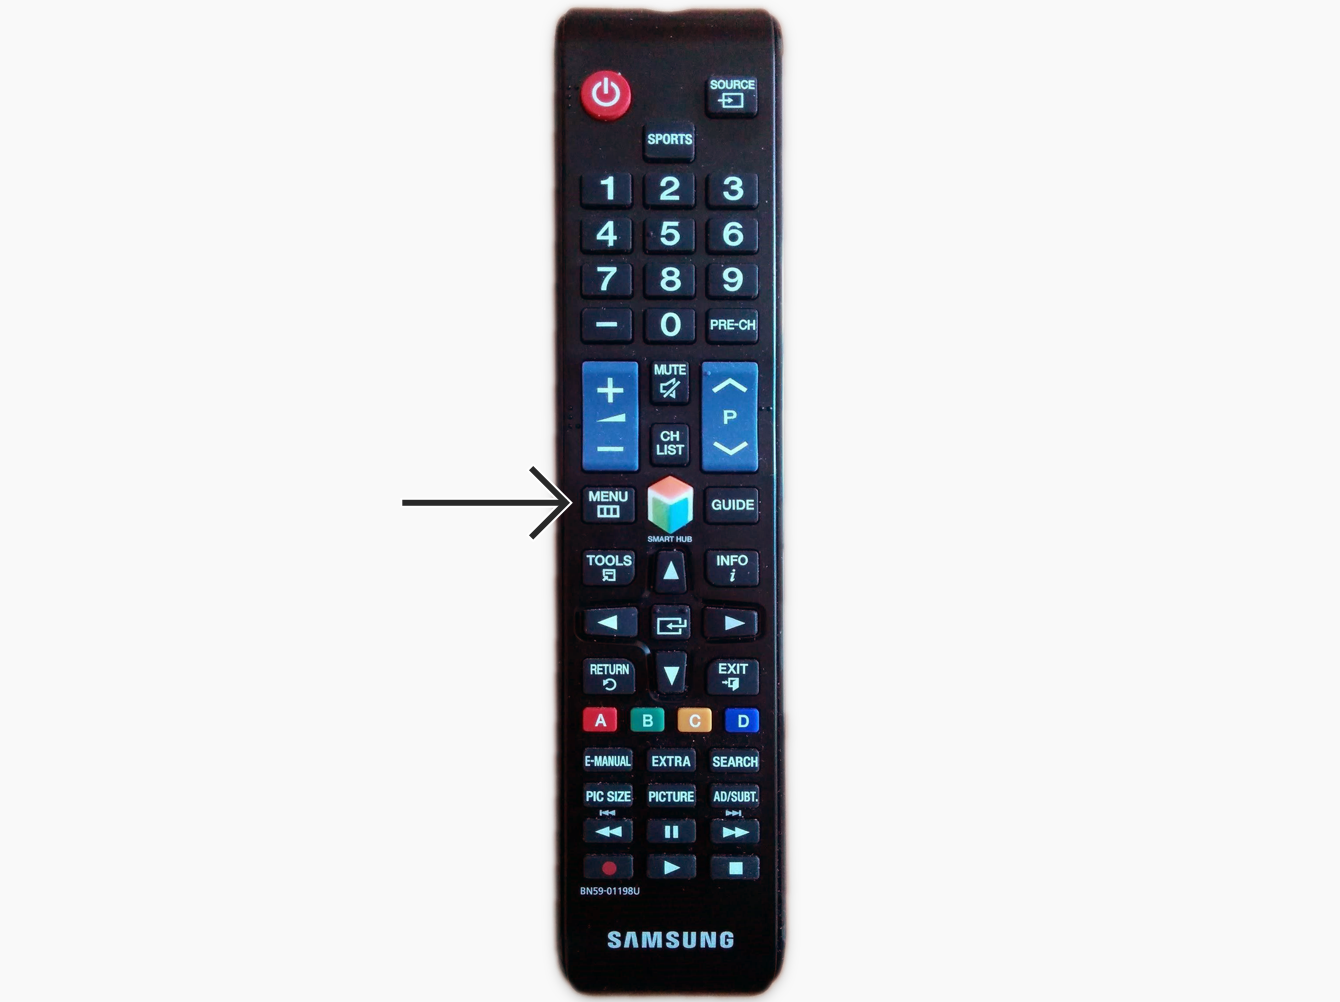 Press the "MENU" button on your remote. 